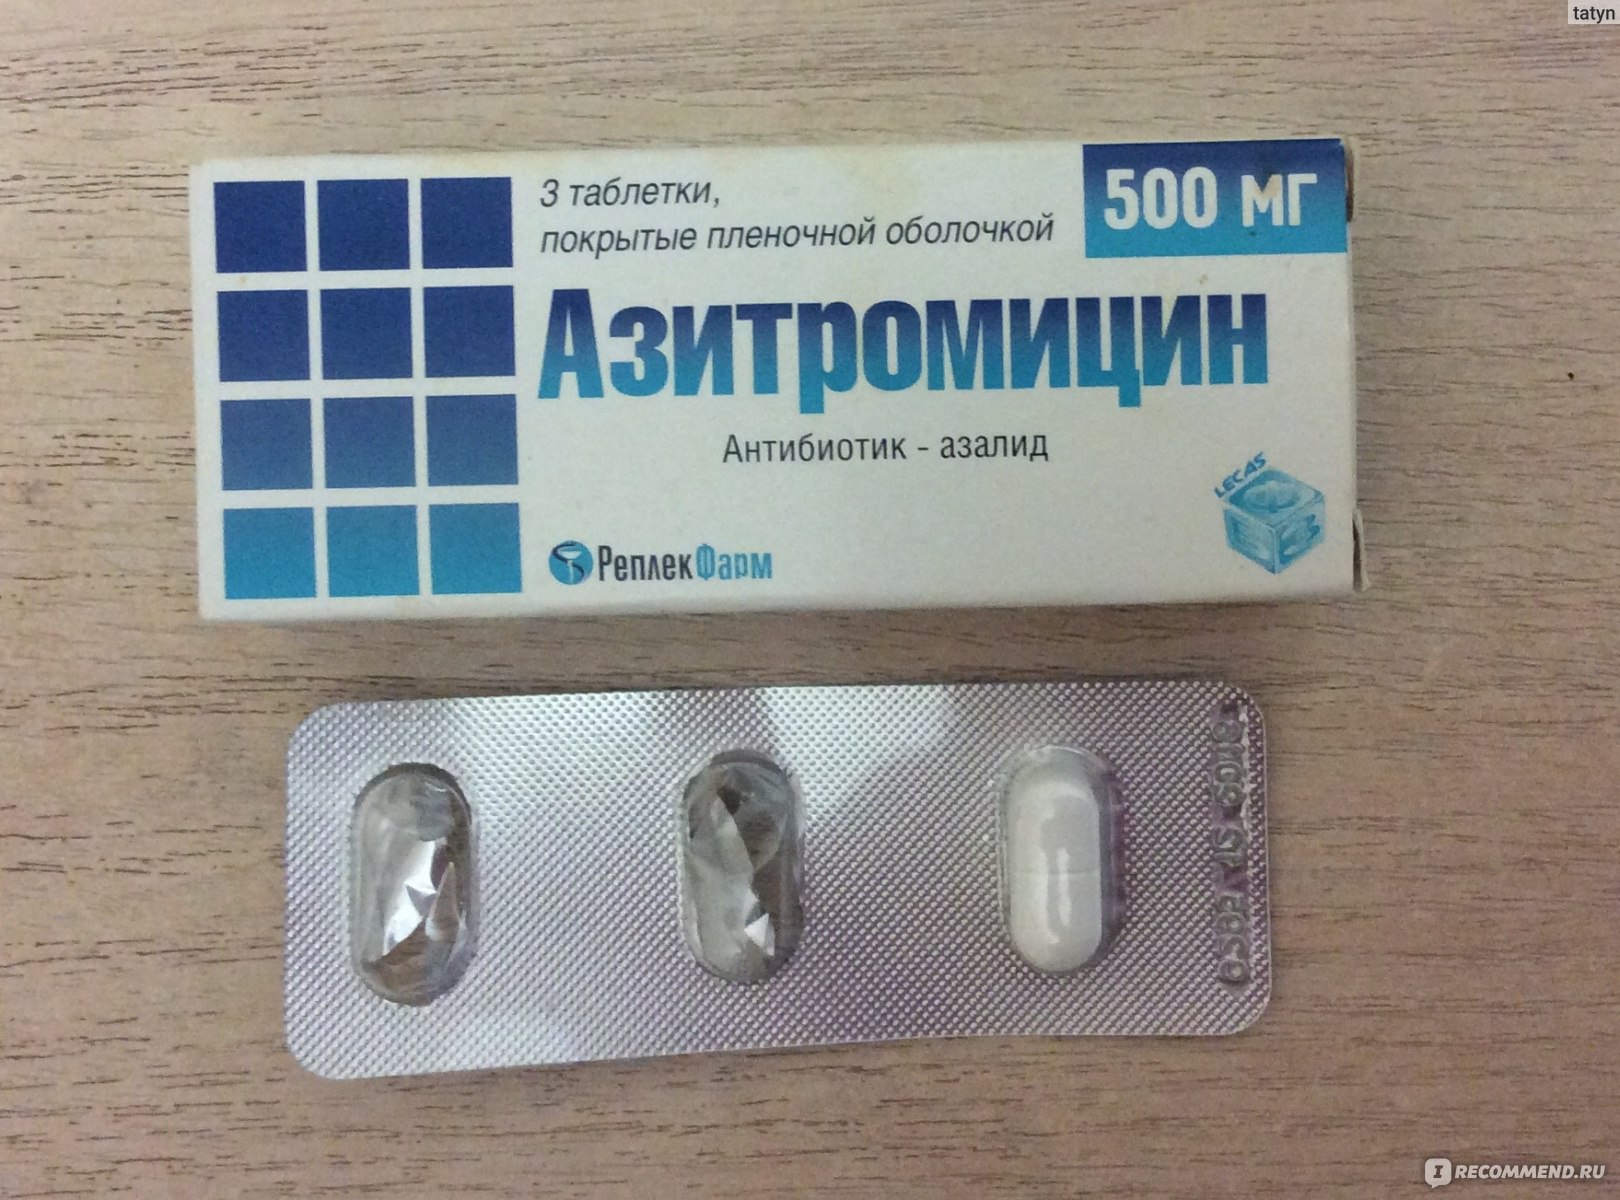 Антибиотик против гриппа. Антибиотик Азитромицин 500 мг. Антибиотик 3 таблетки в упаковке Азитромицин. Антибиотик от кашля 3 таблетки название. Сильный антибиотик от простуды 3 таблетки.